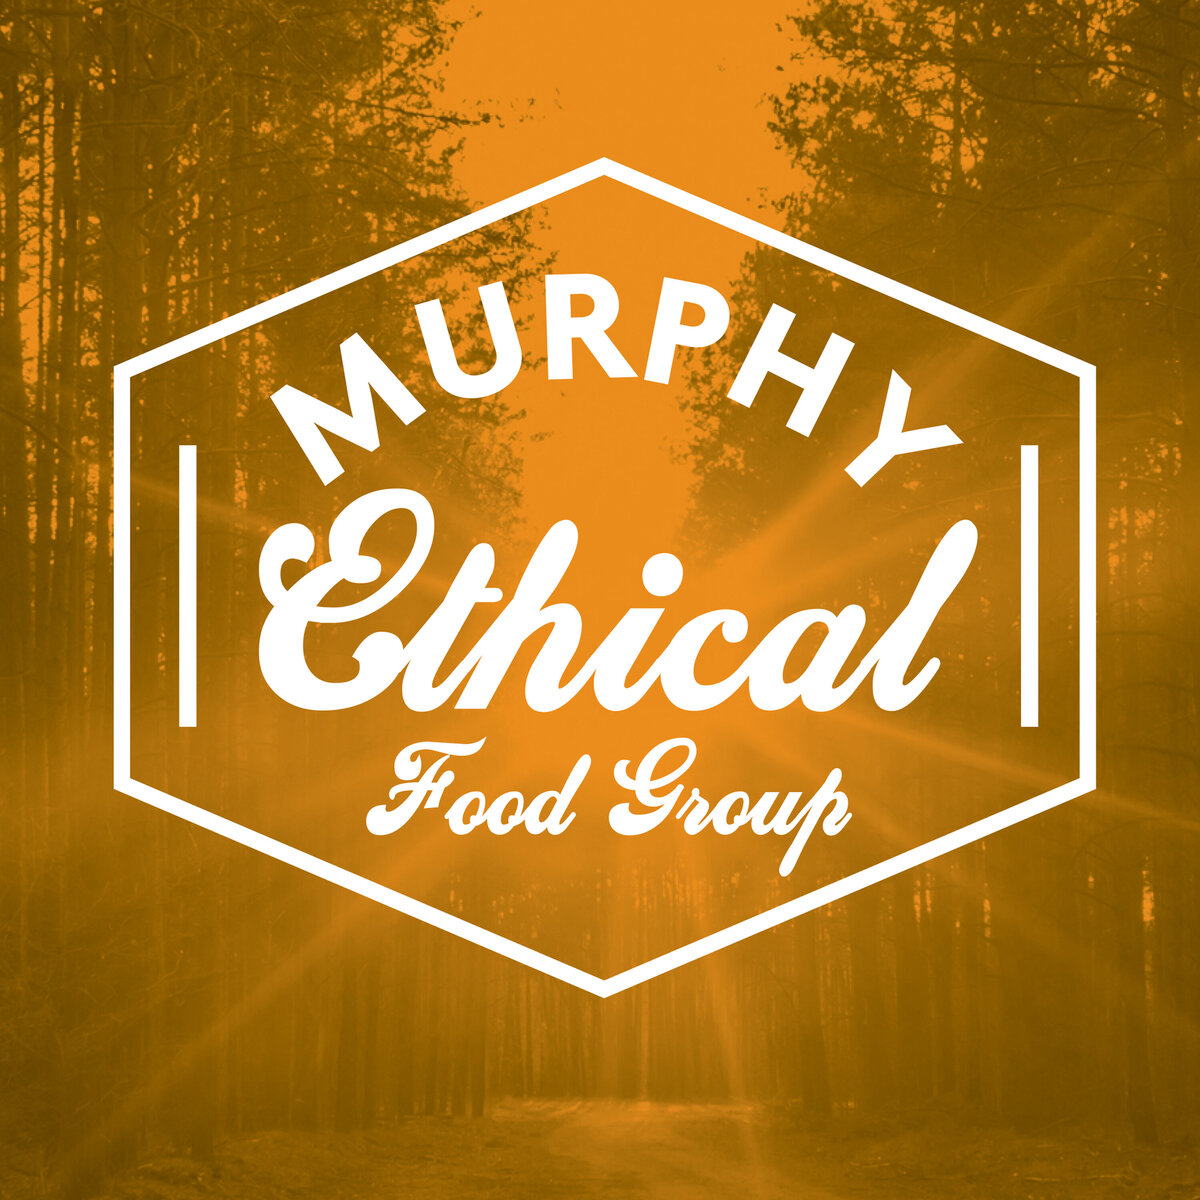 Murphy Ethical Food Group (Logo)